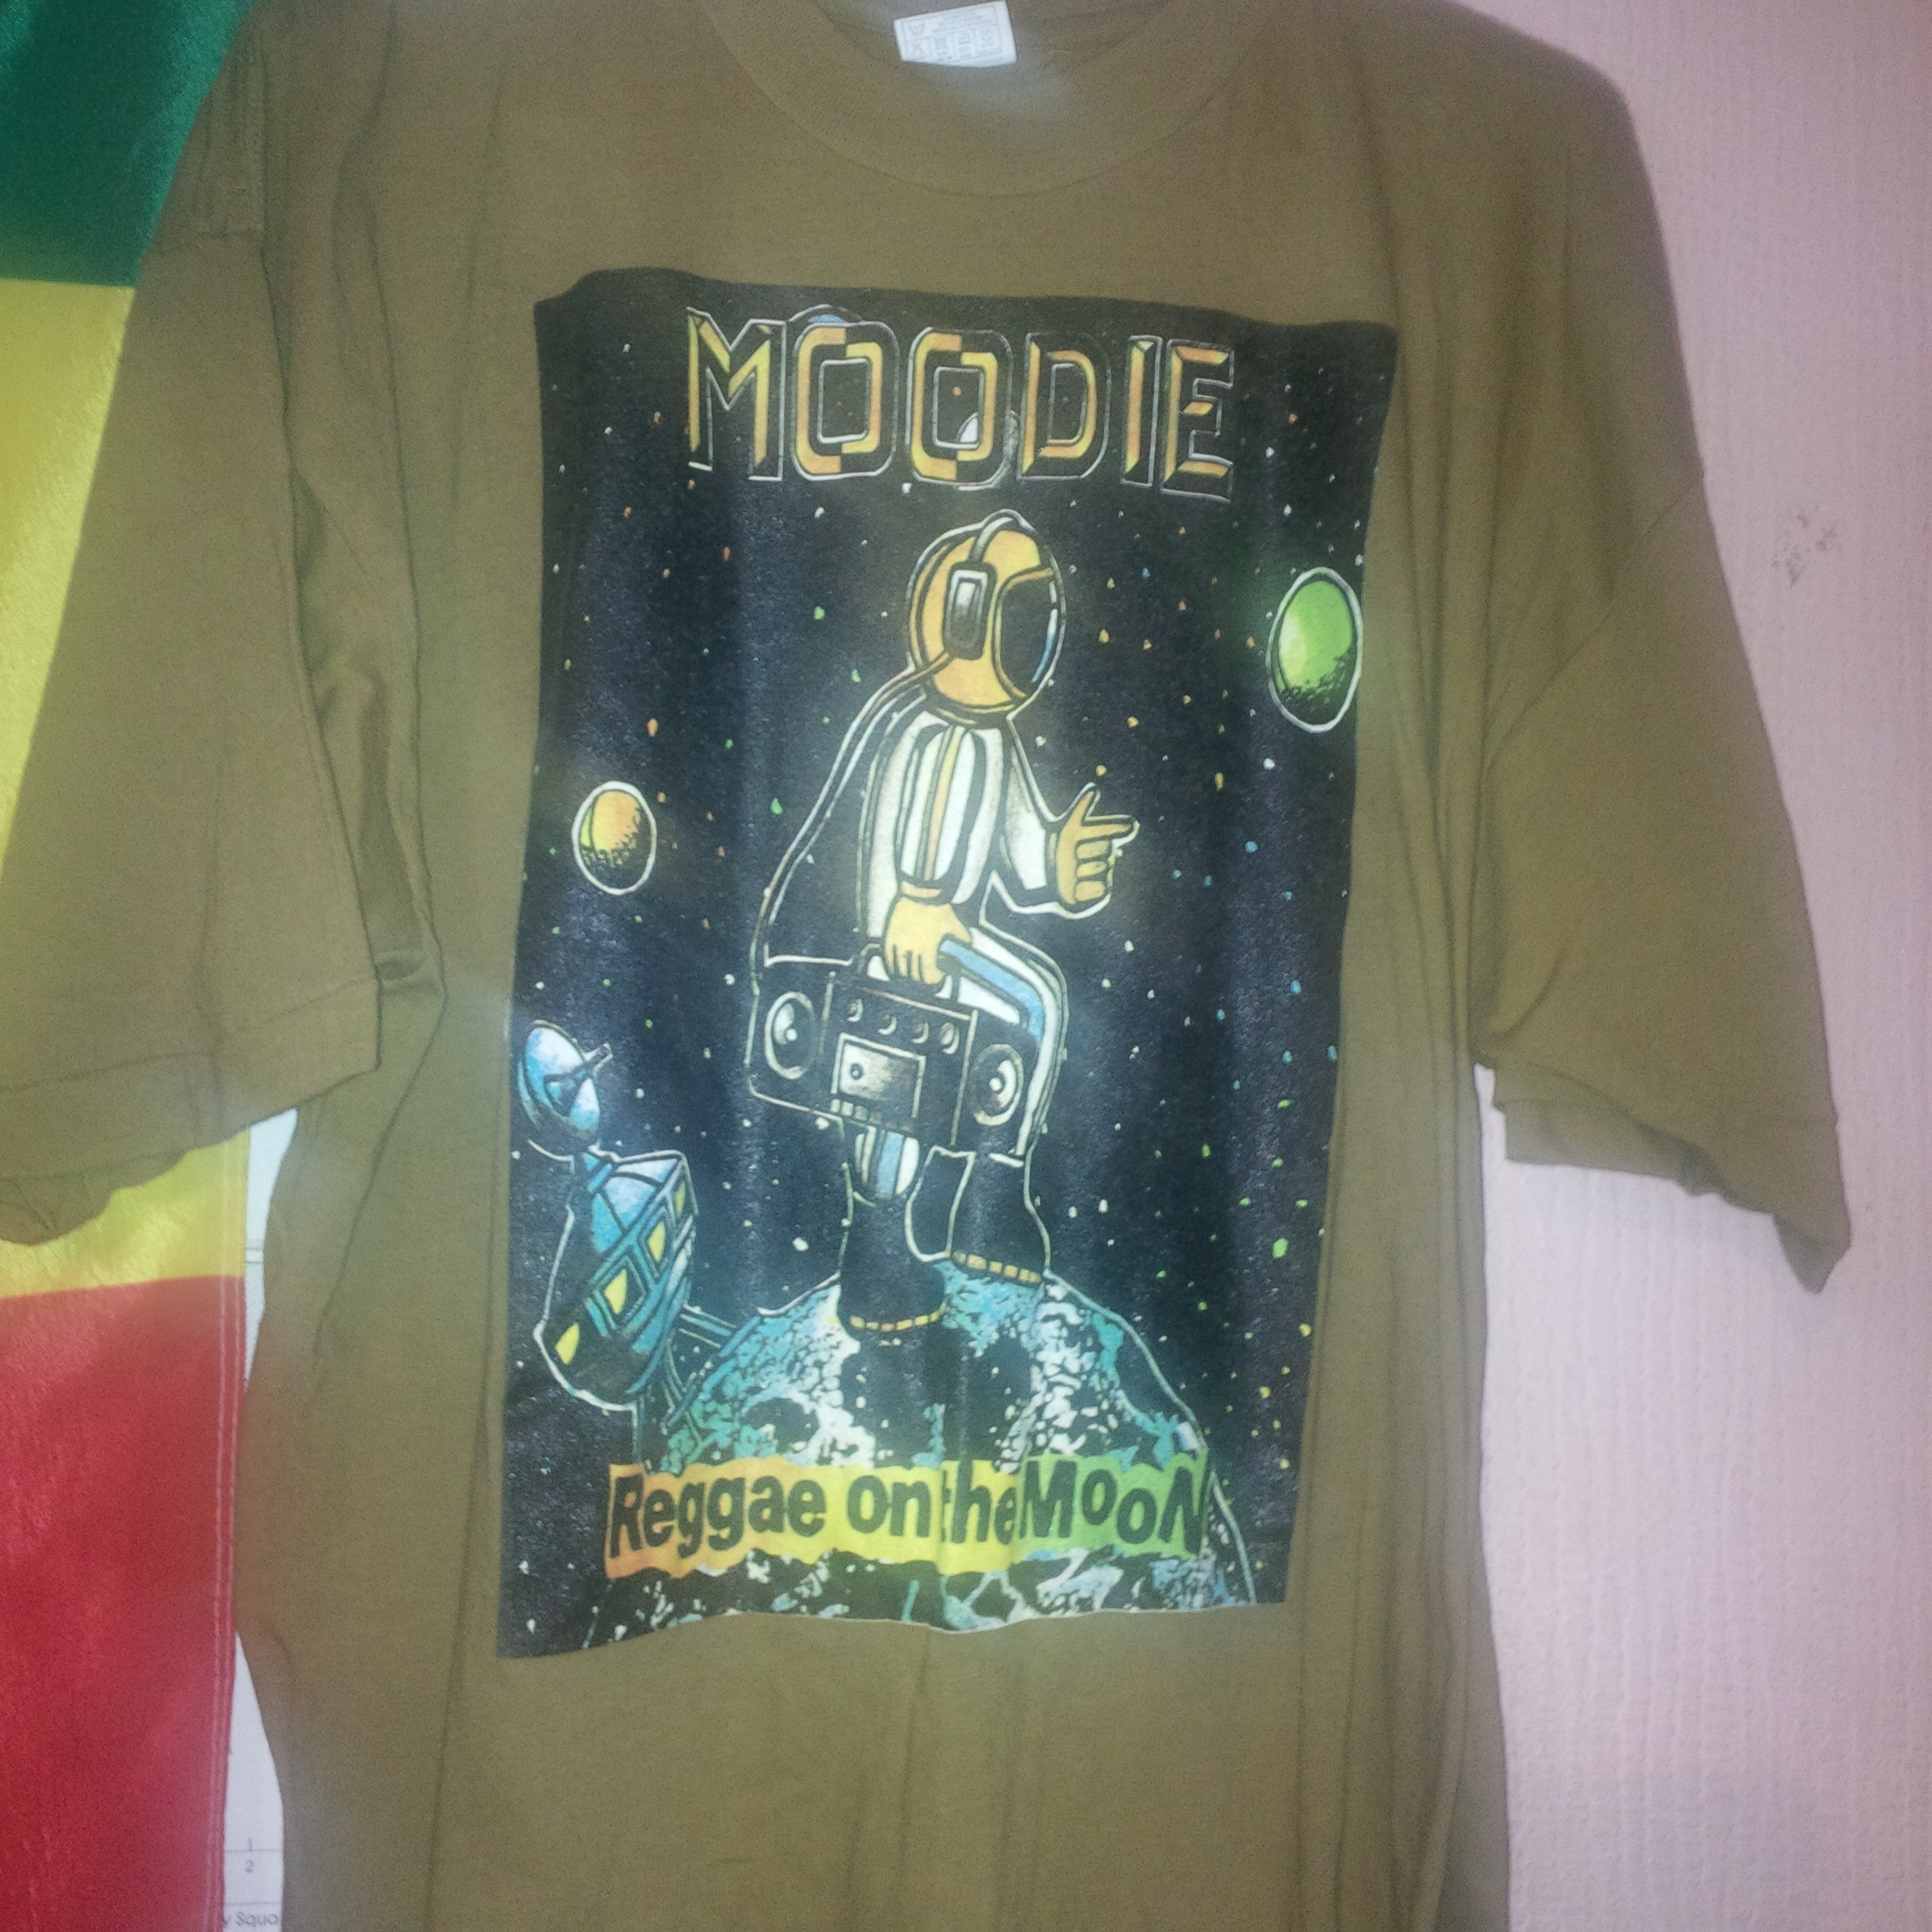 Reggae On The Moon Tee Shirt Moodie Music - free roblox code generator 2019 earn free robux gift cards by john mike issuu